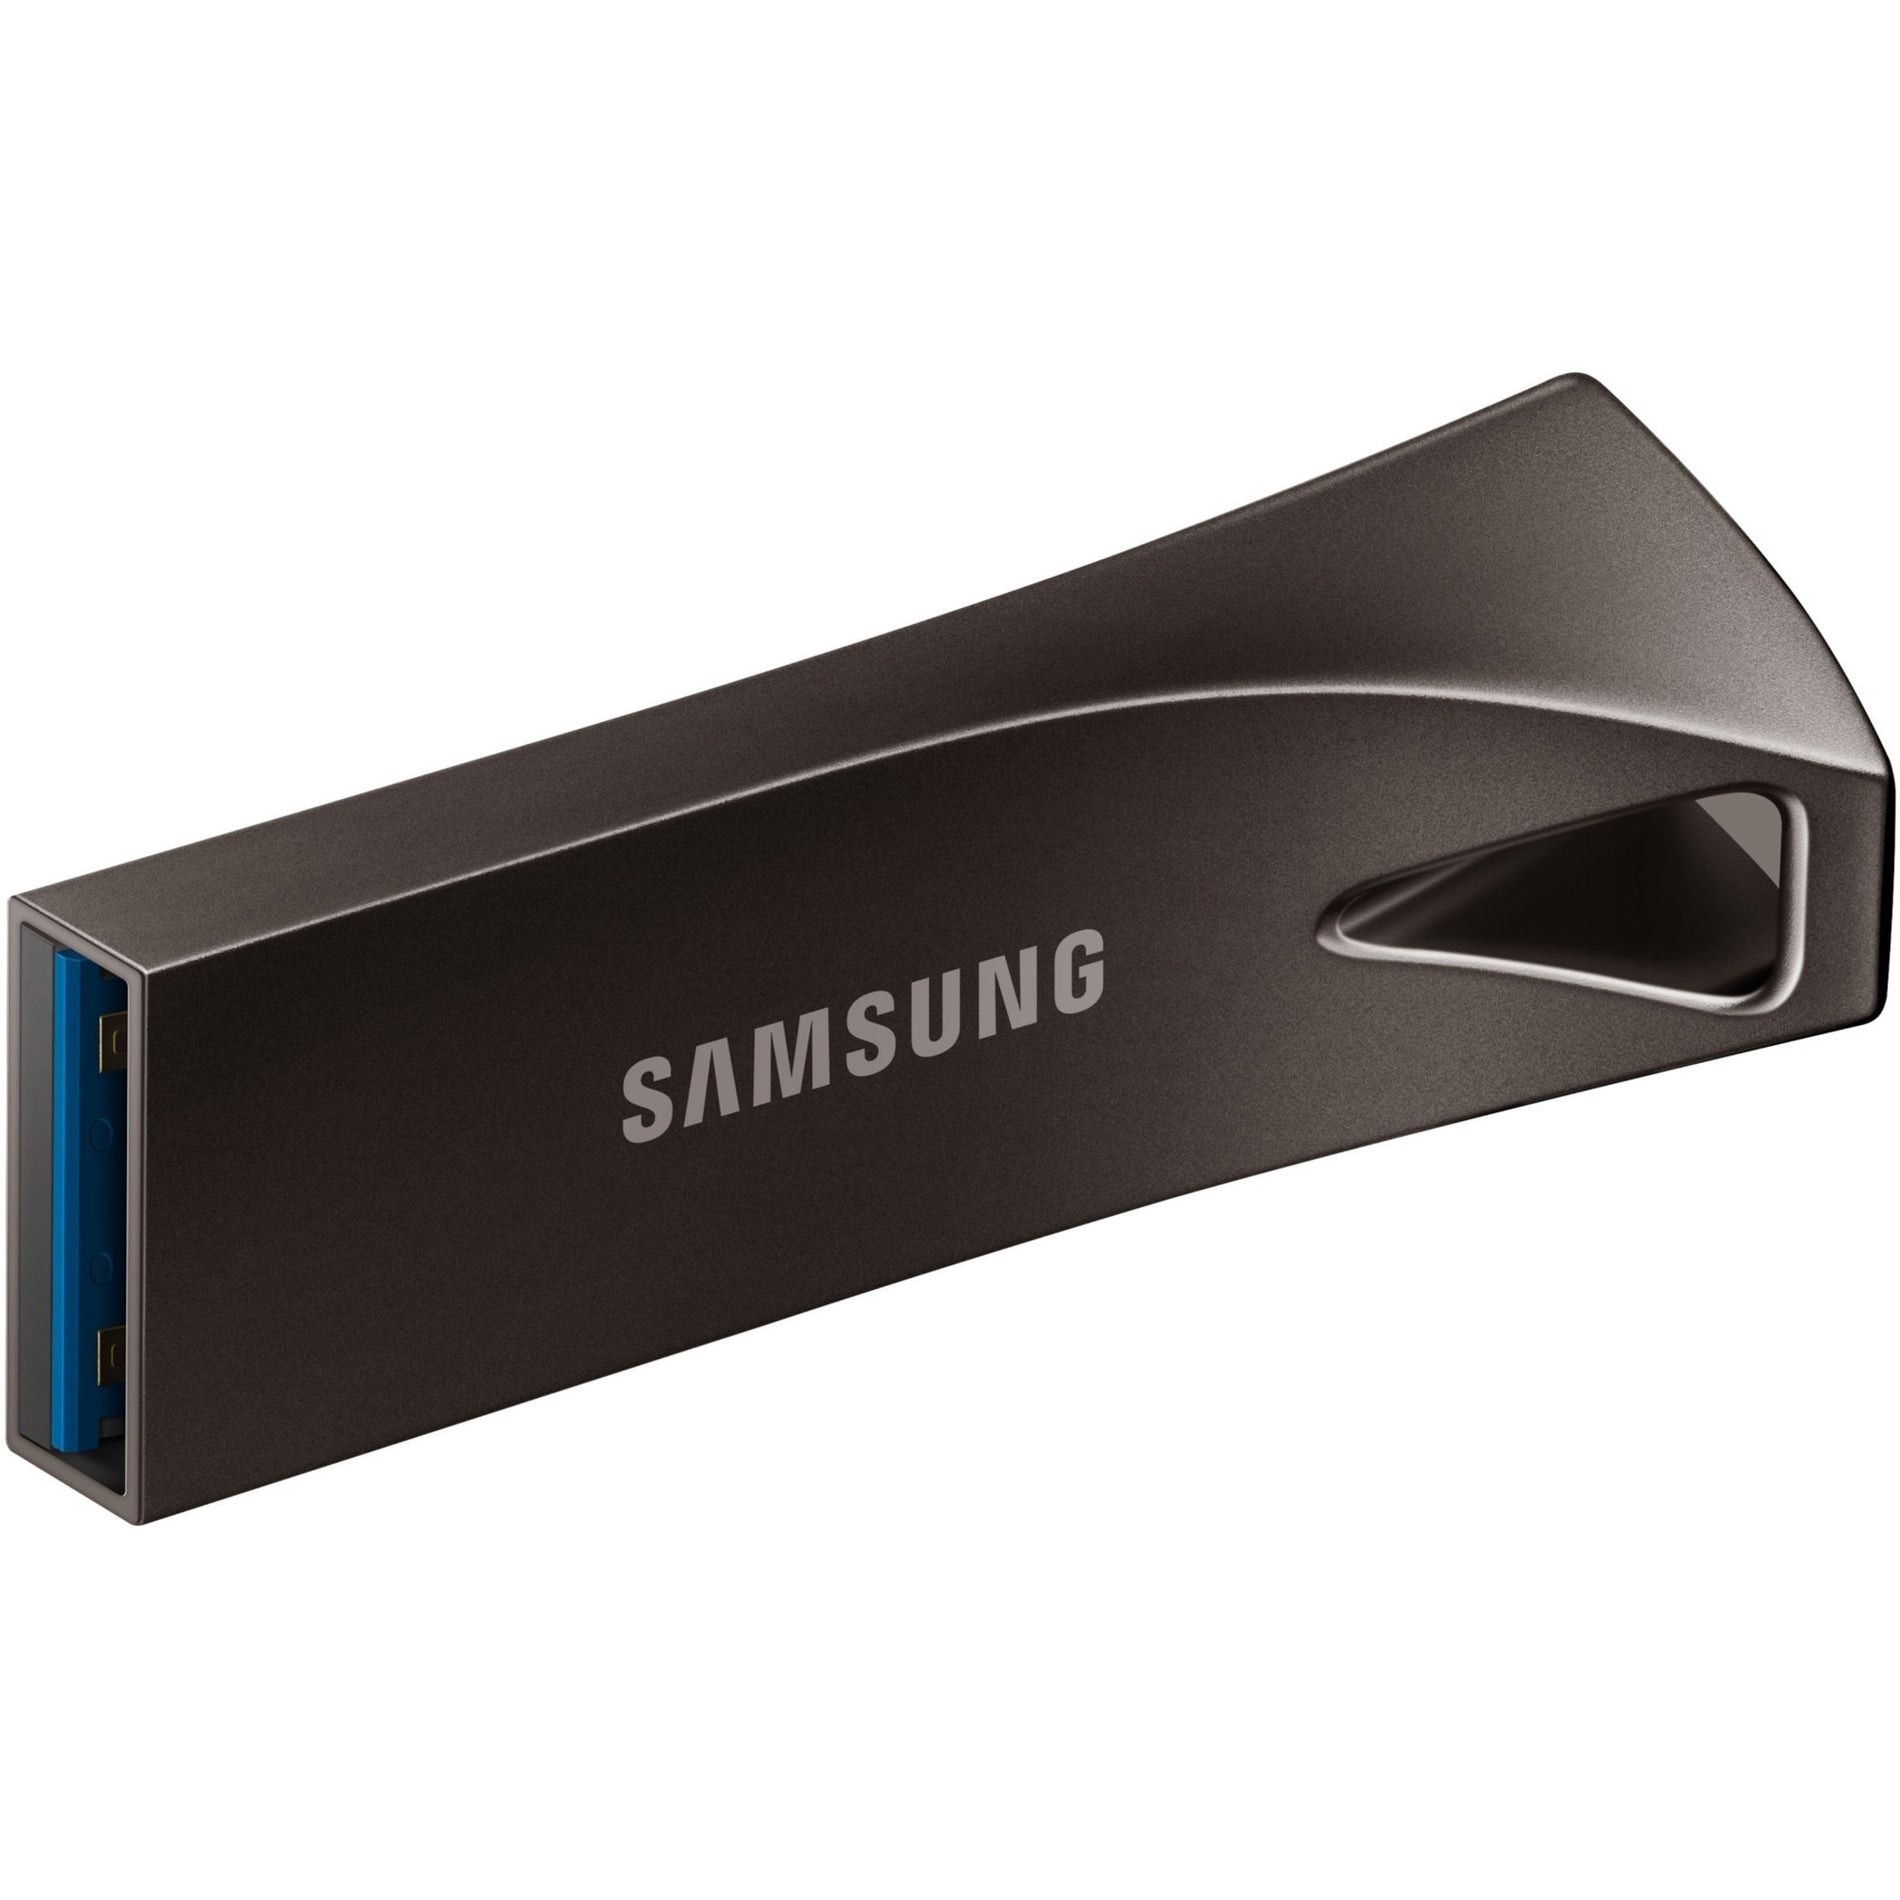 Samsung MUF-128BE4/AM USB 3.1 Flash Drive Bar Plus 128GB Titan Gray, 5 Year Warranty